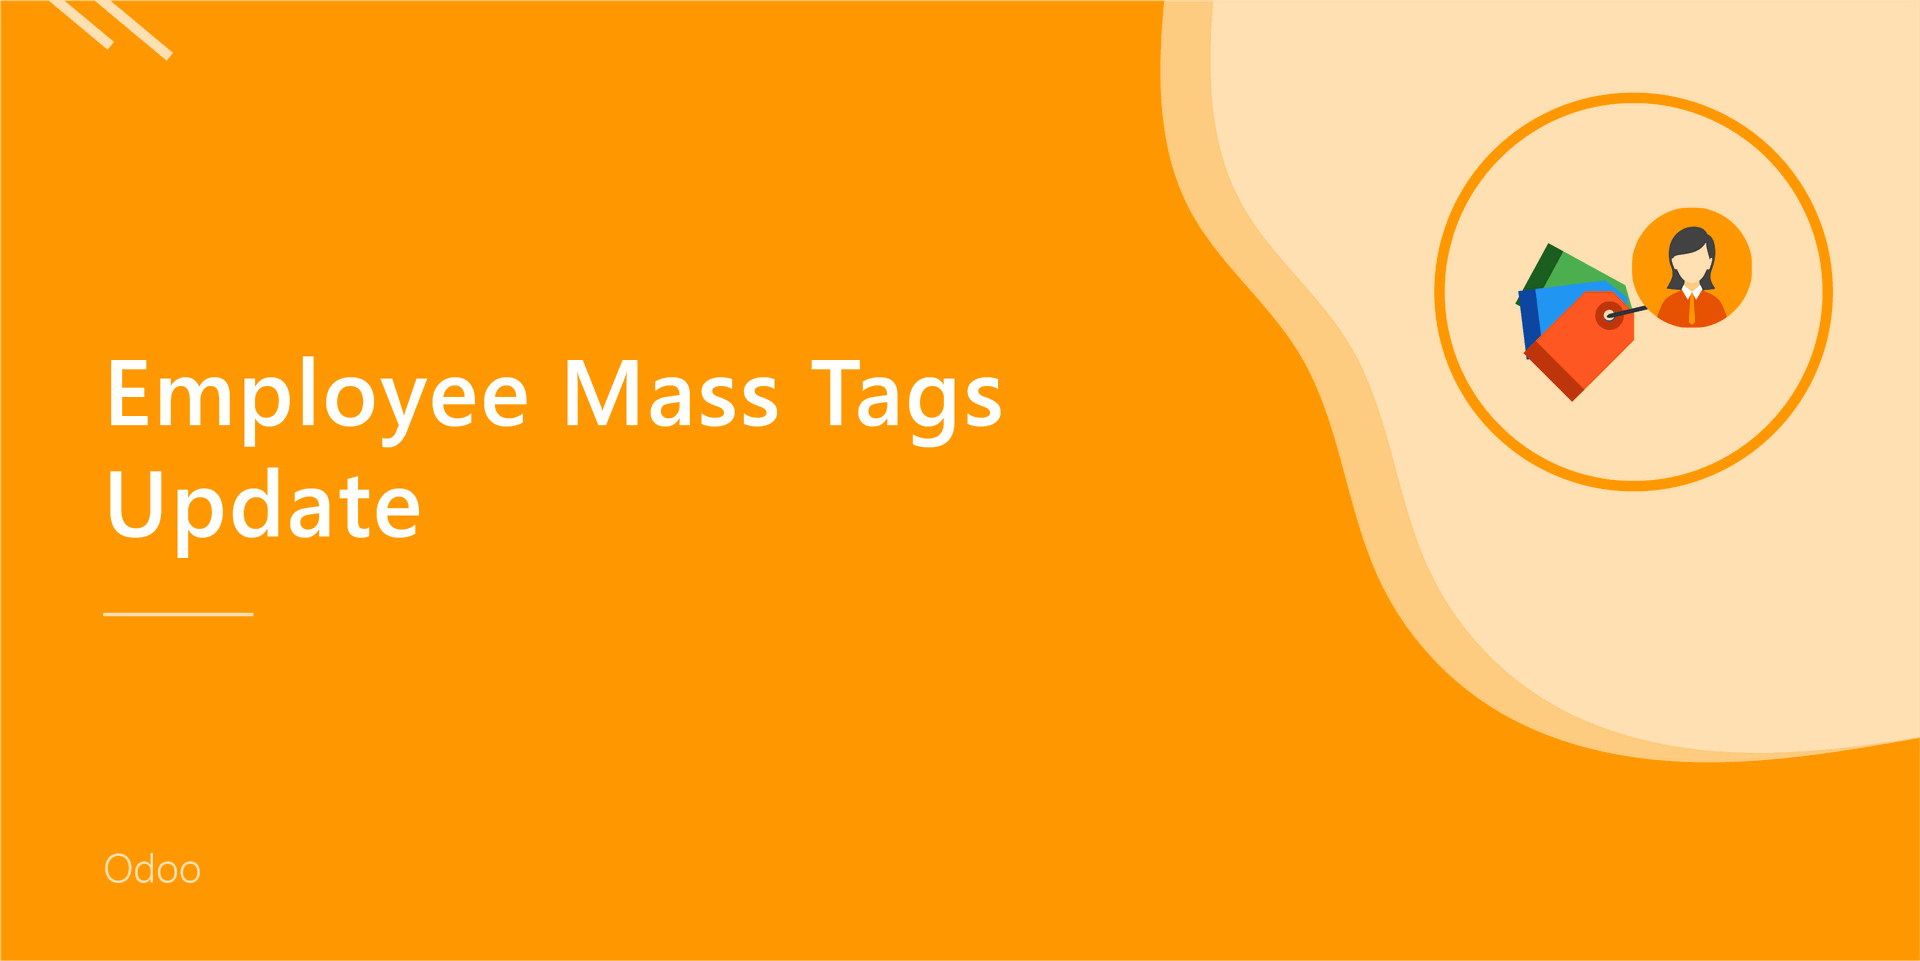 Employee Mass Tags Update
